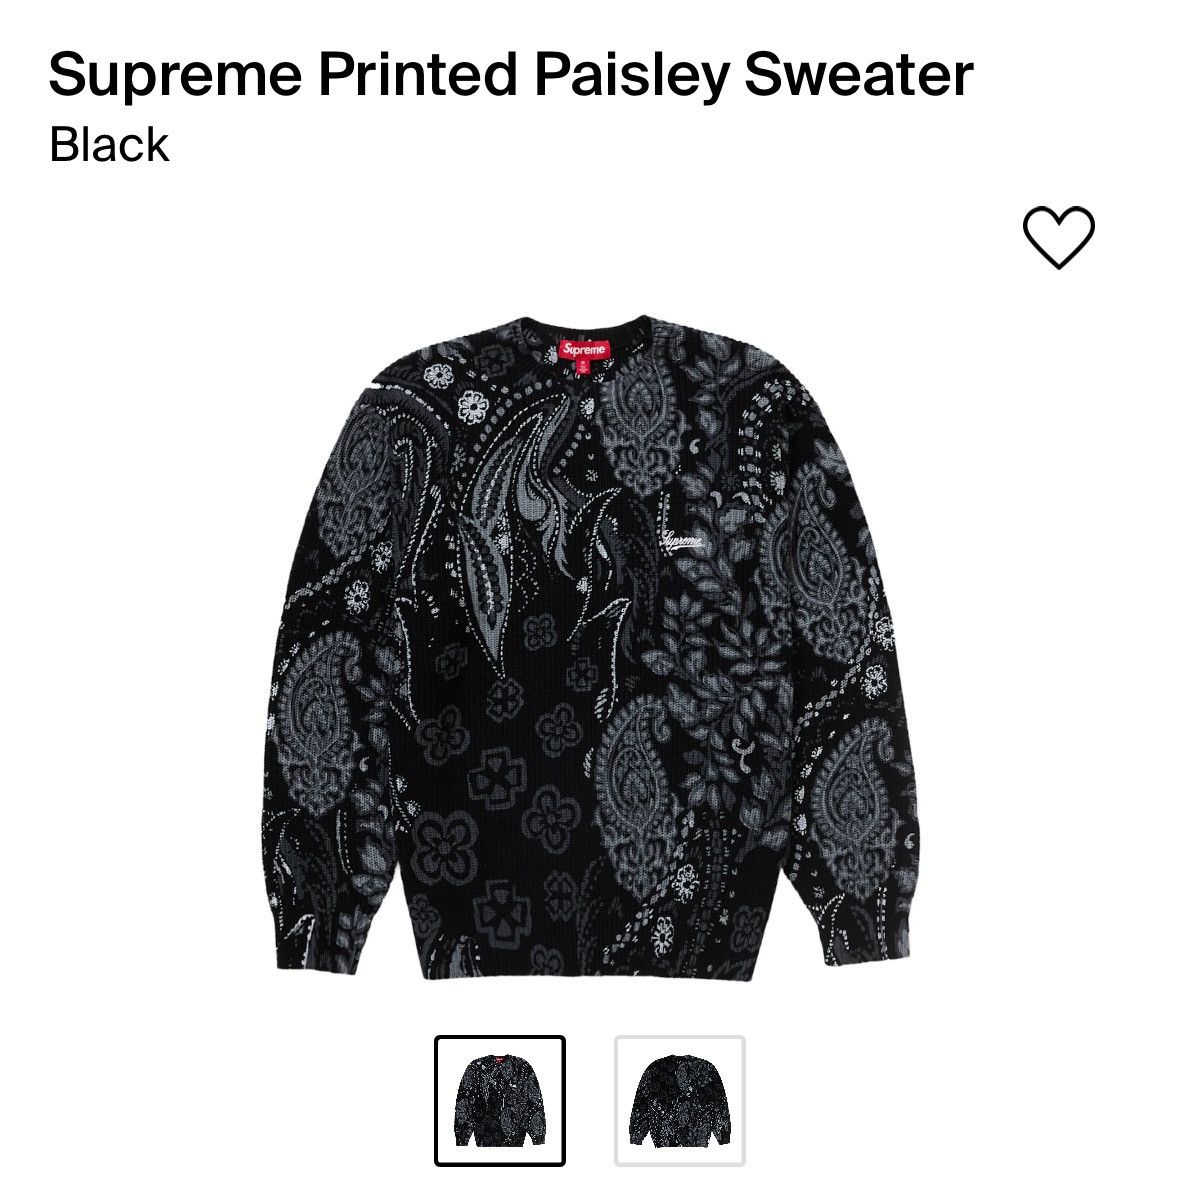 Supreme printed paisley sweater | Grailed